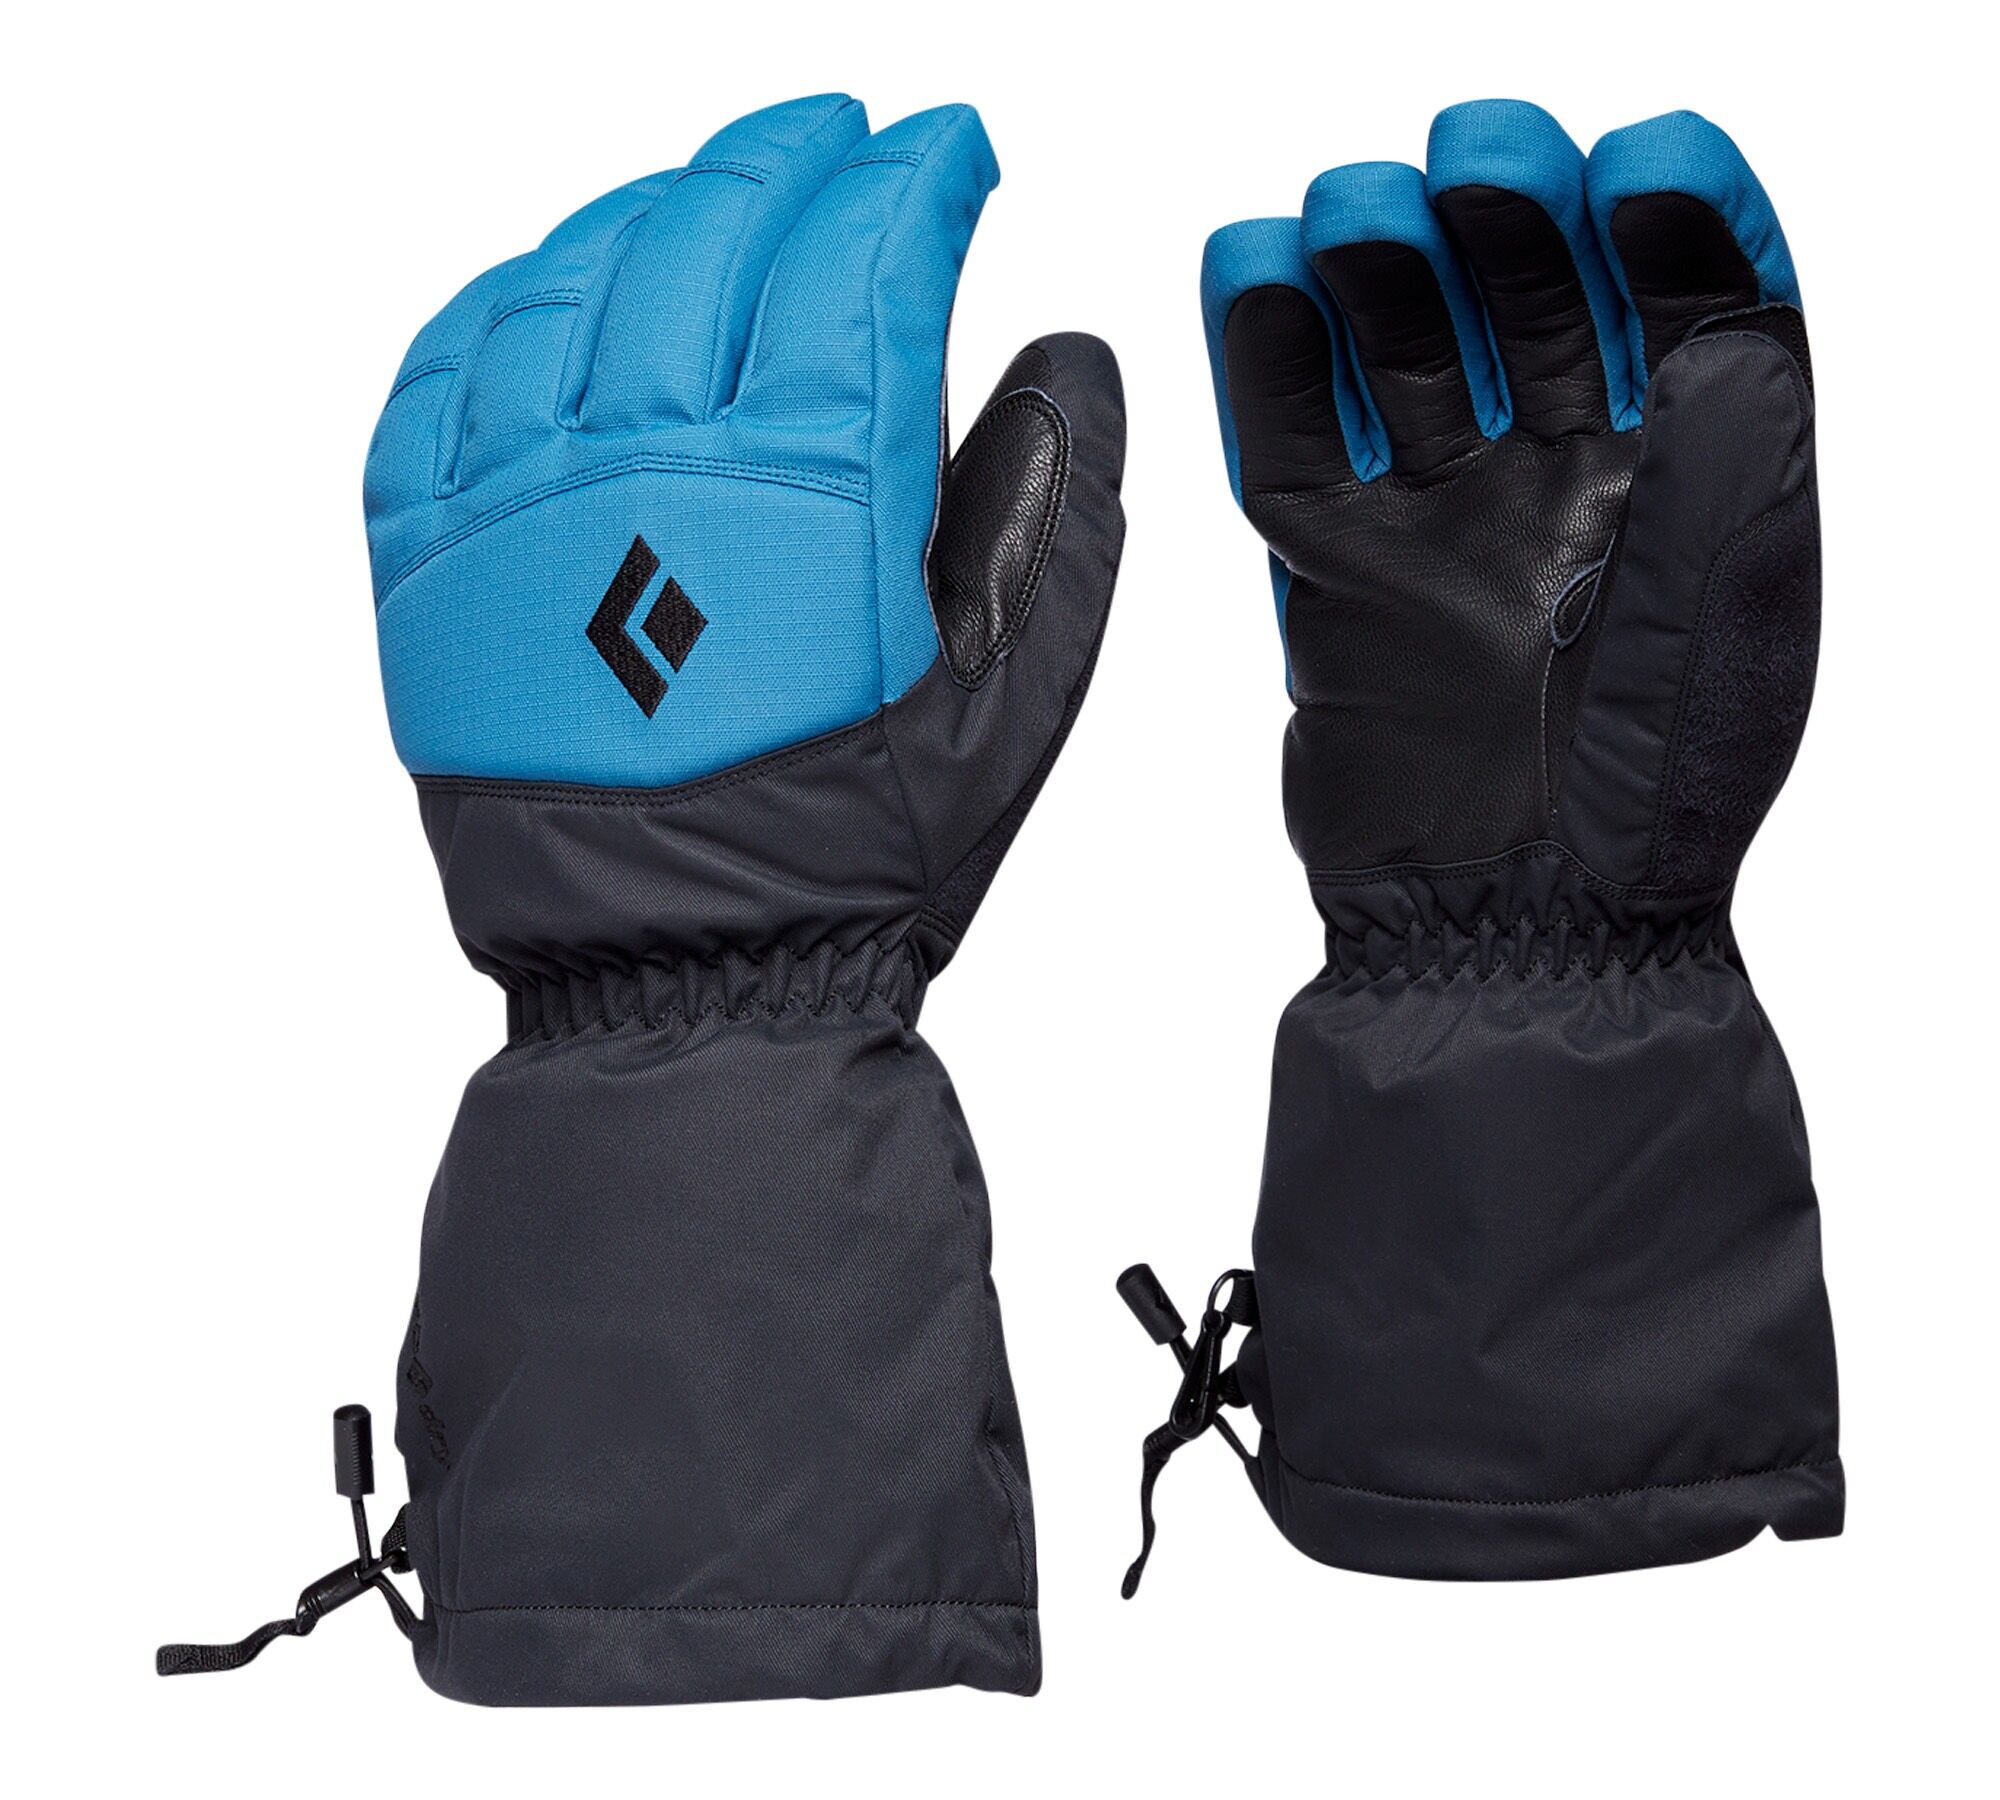 Black Diamond Recon Gloves - Skidhandskar